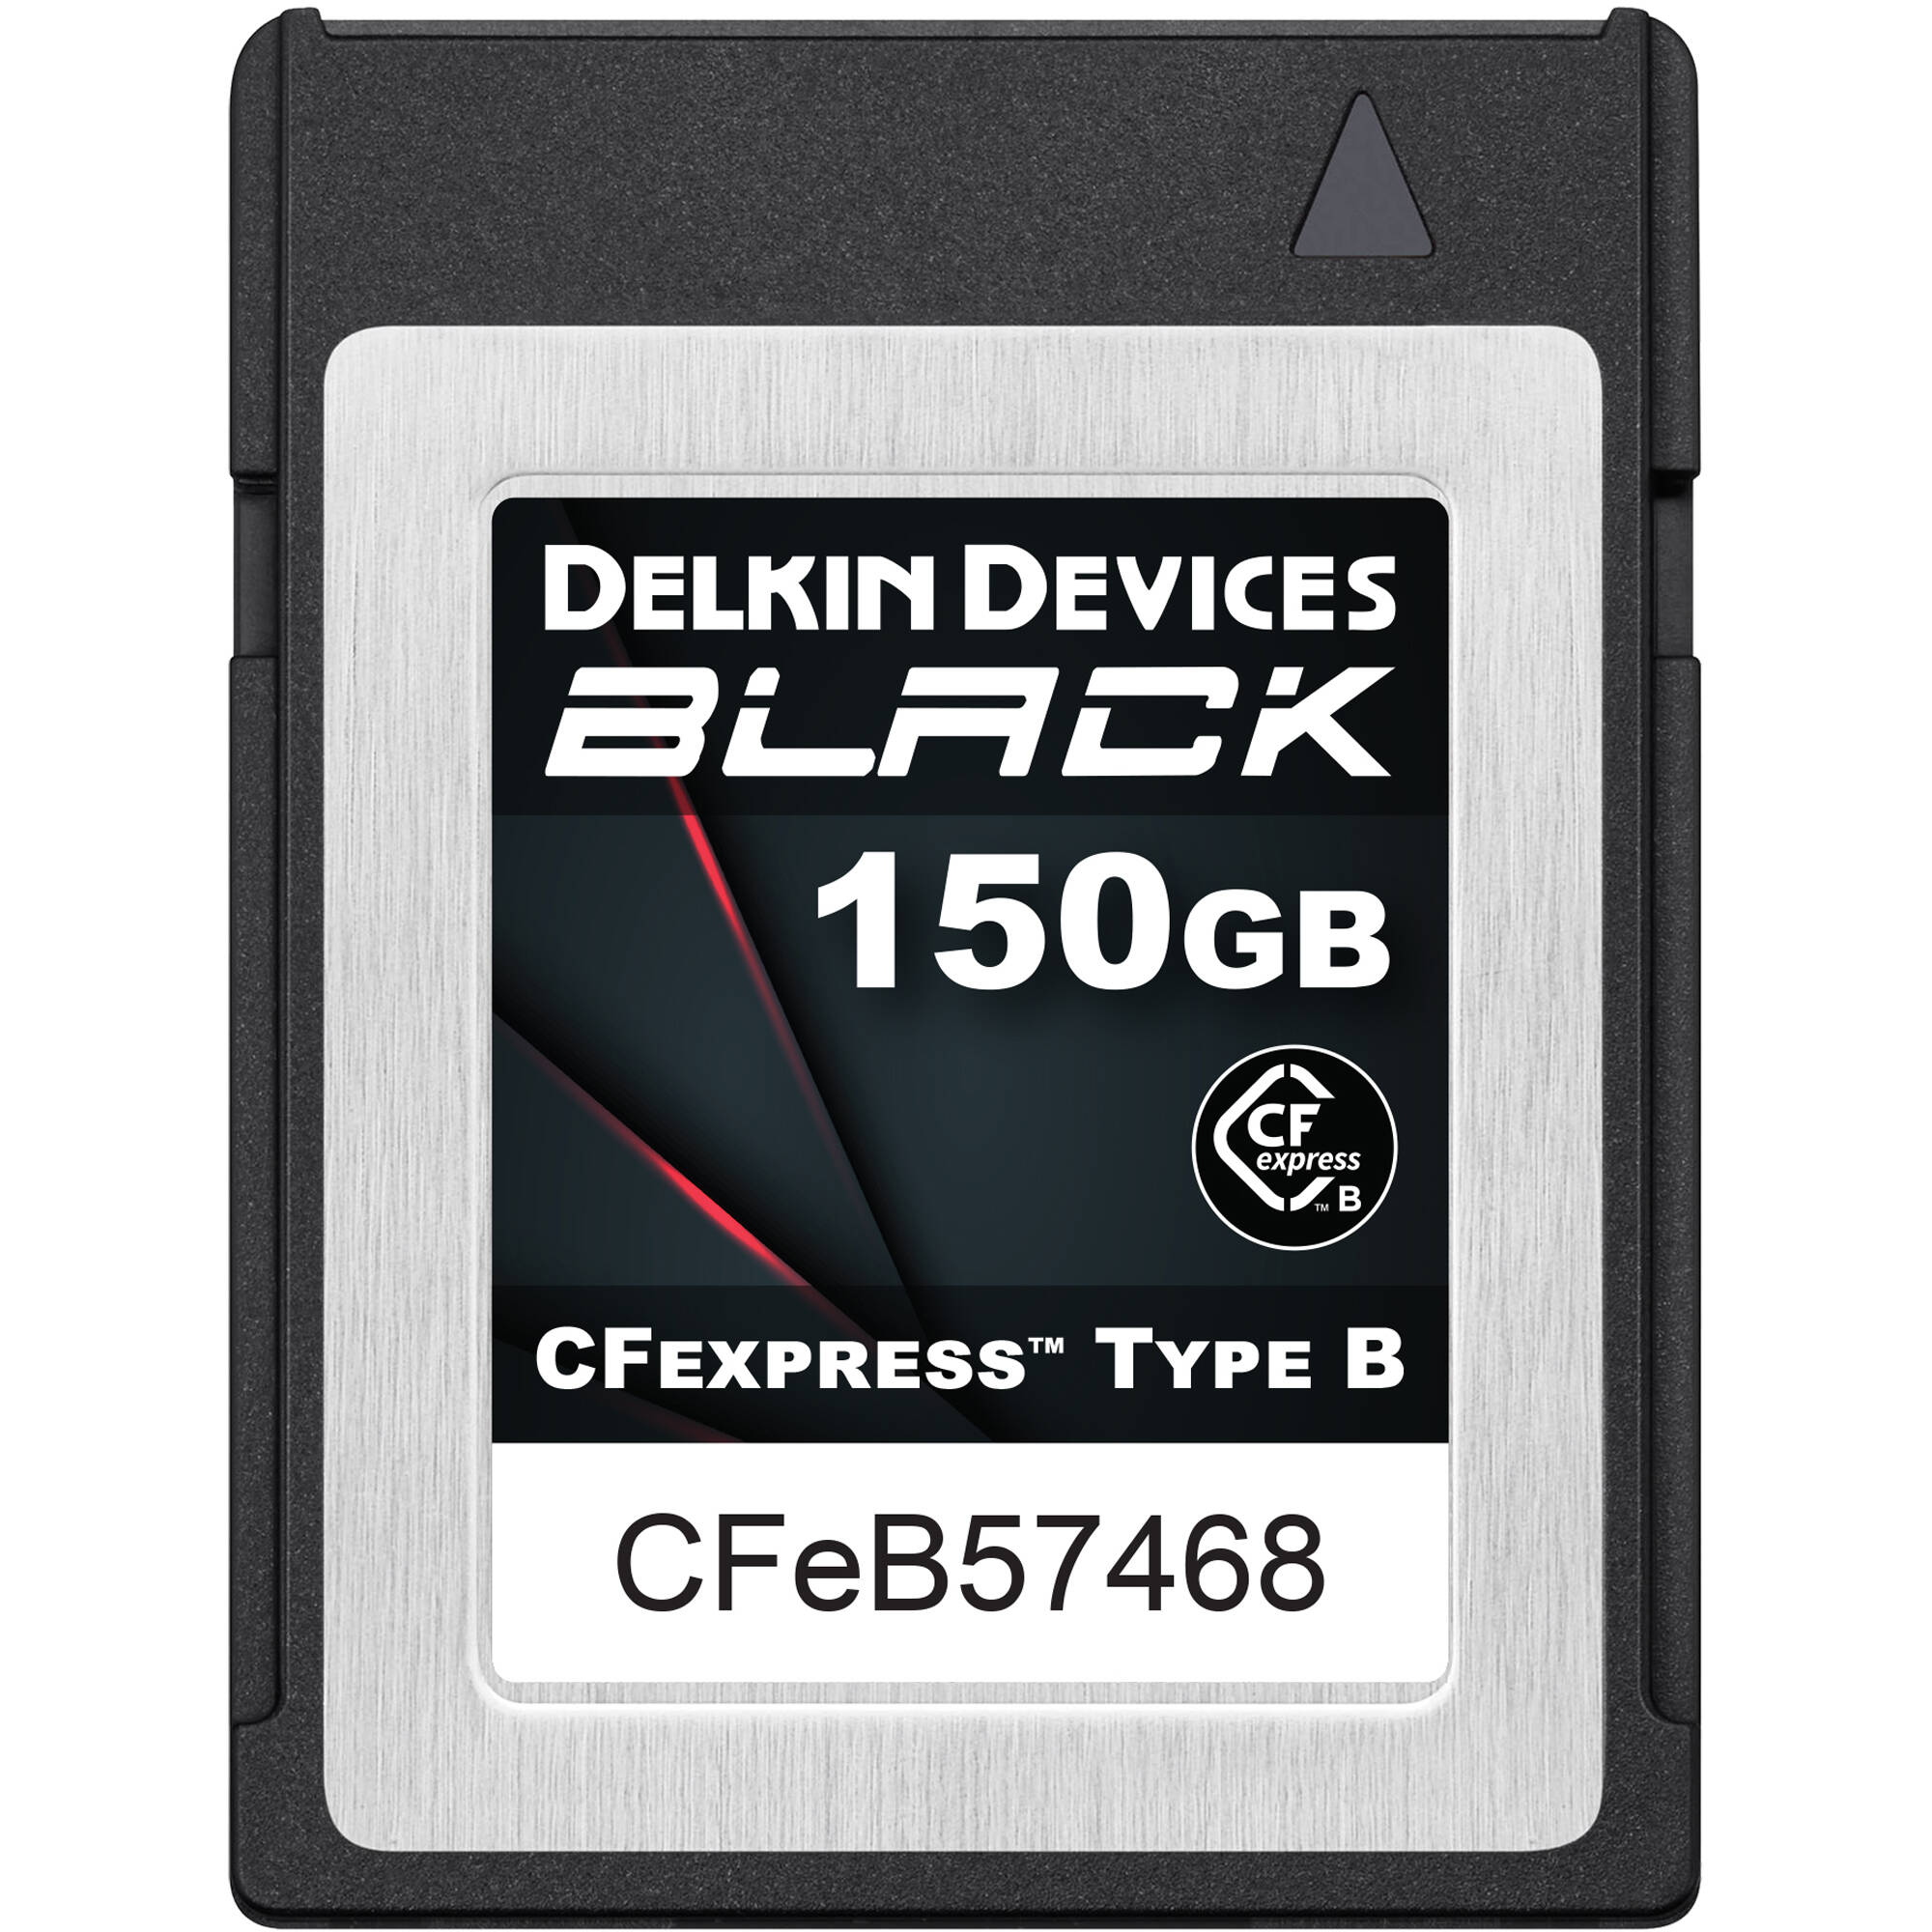 Delkin BLACK CFexpress Type B Memory Card 150GB